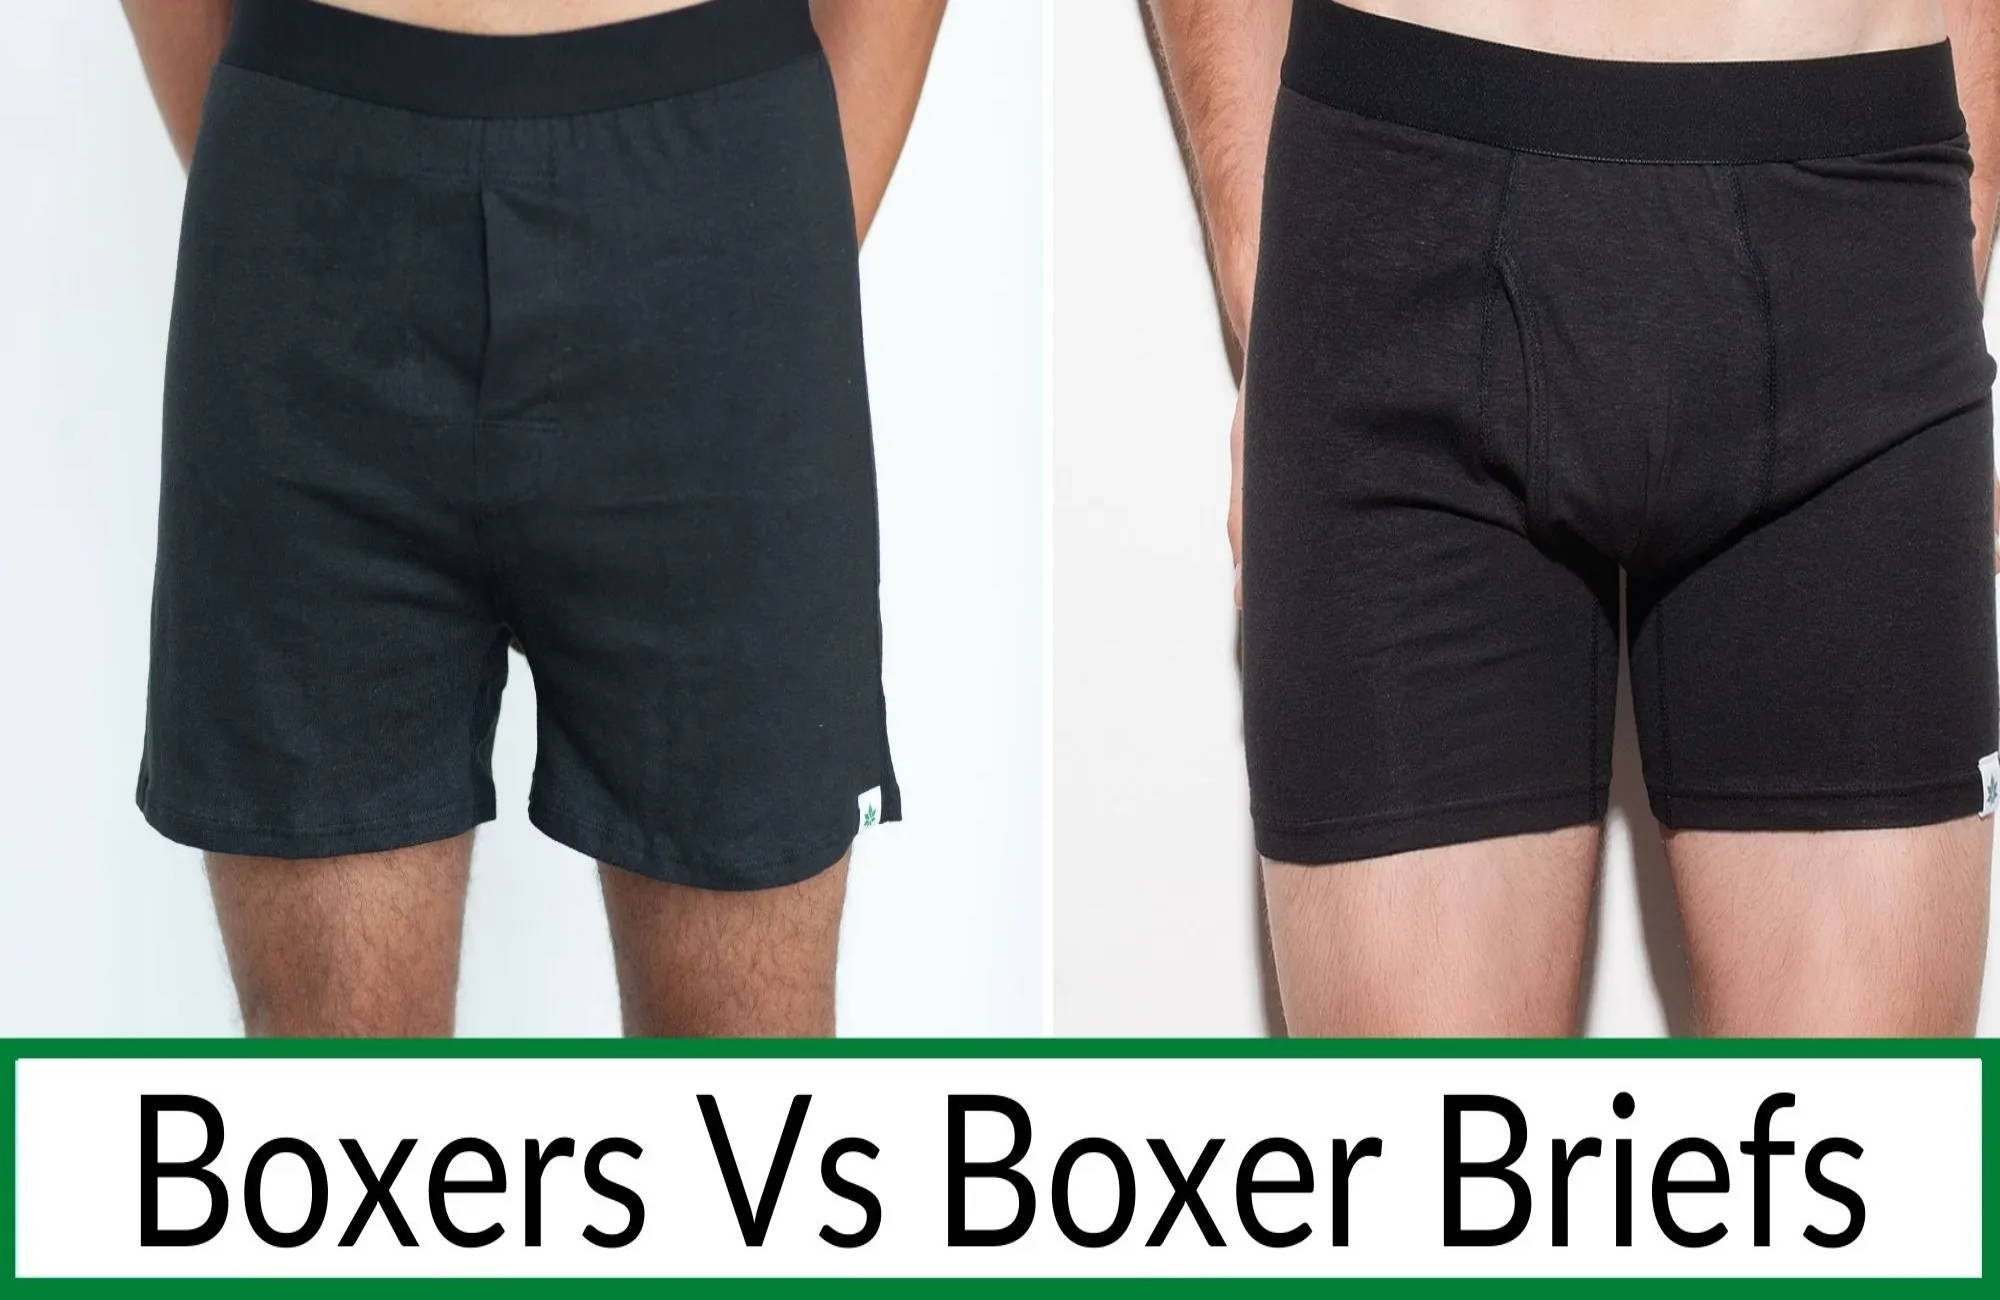 Must real men wear boxers, not briefs?